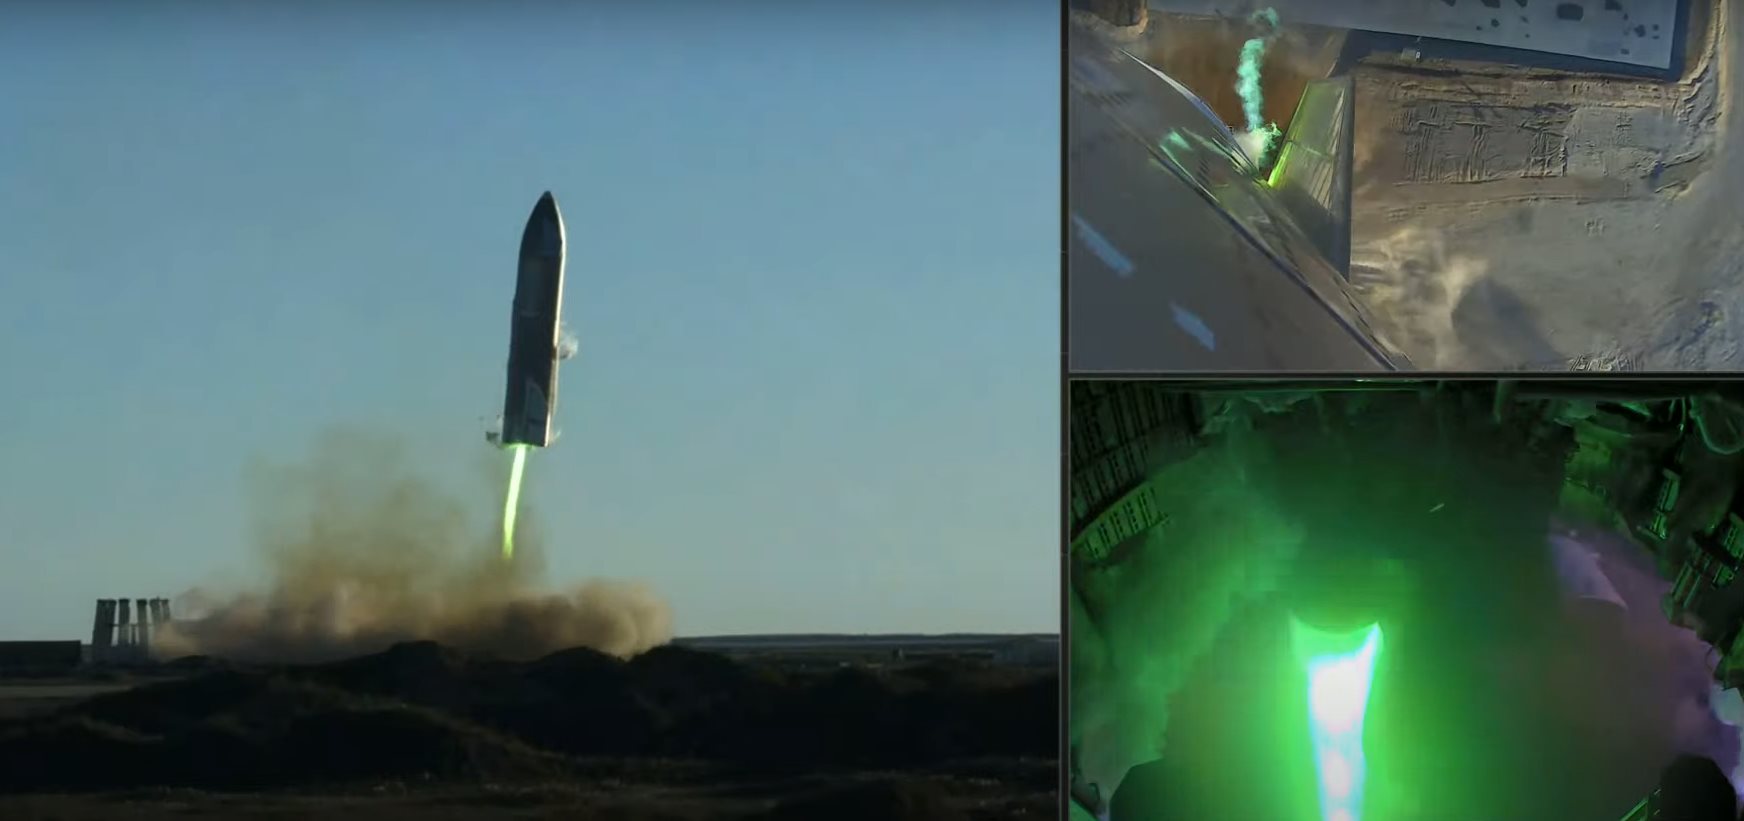 Starship test flight 3. SPACEX Starship взрыв. Старшип ракета на старте. Неудачный пуск ракеты.